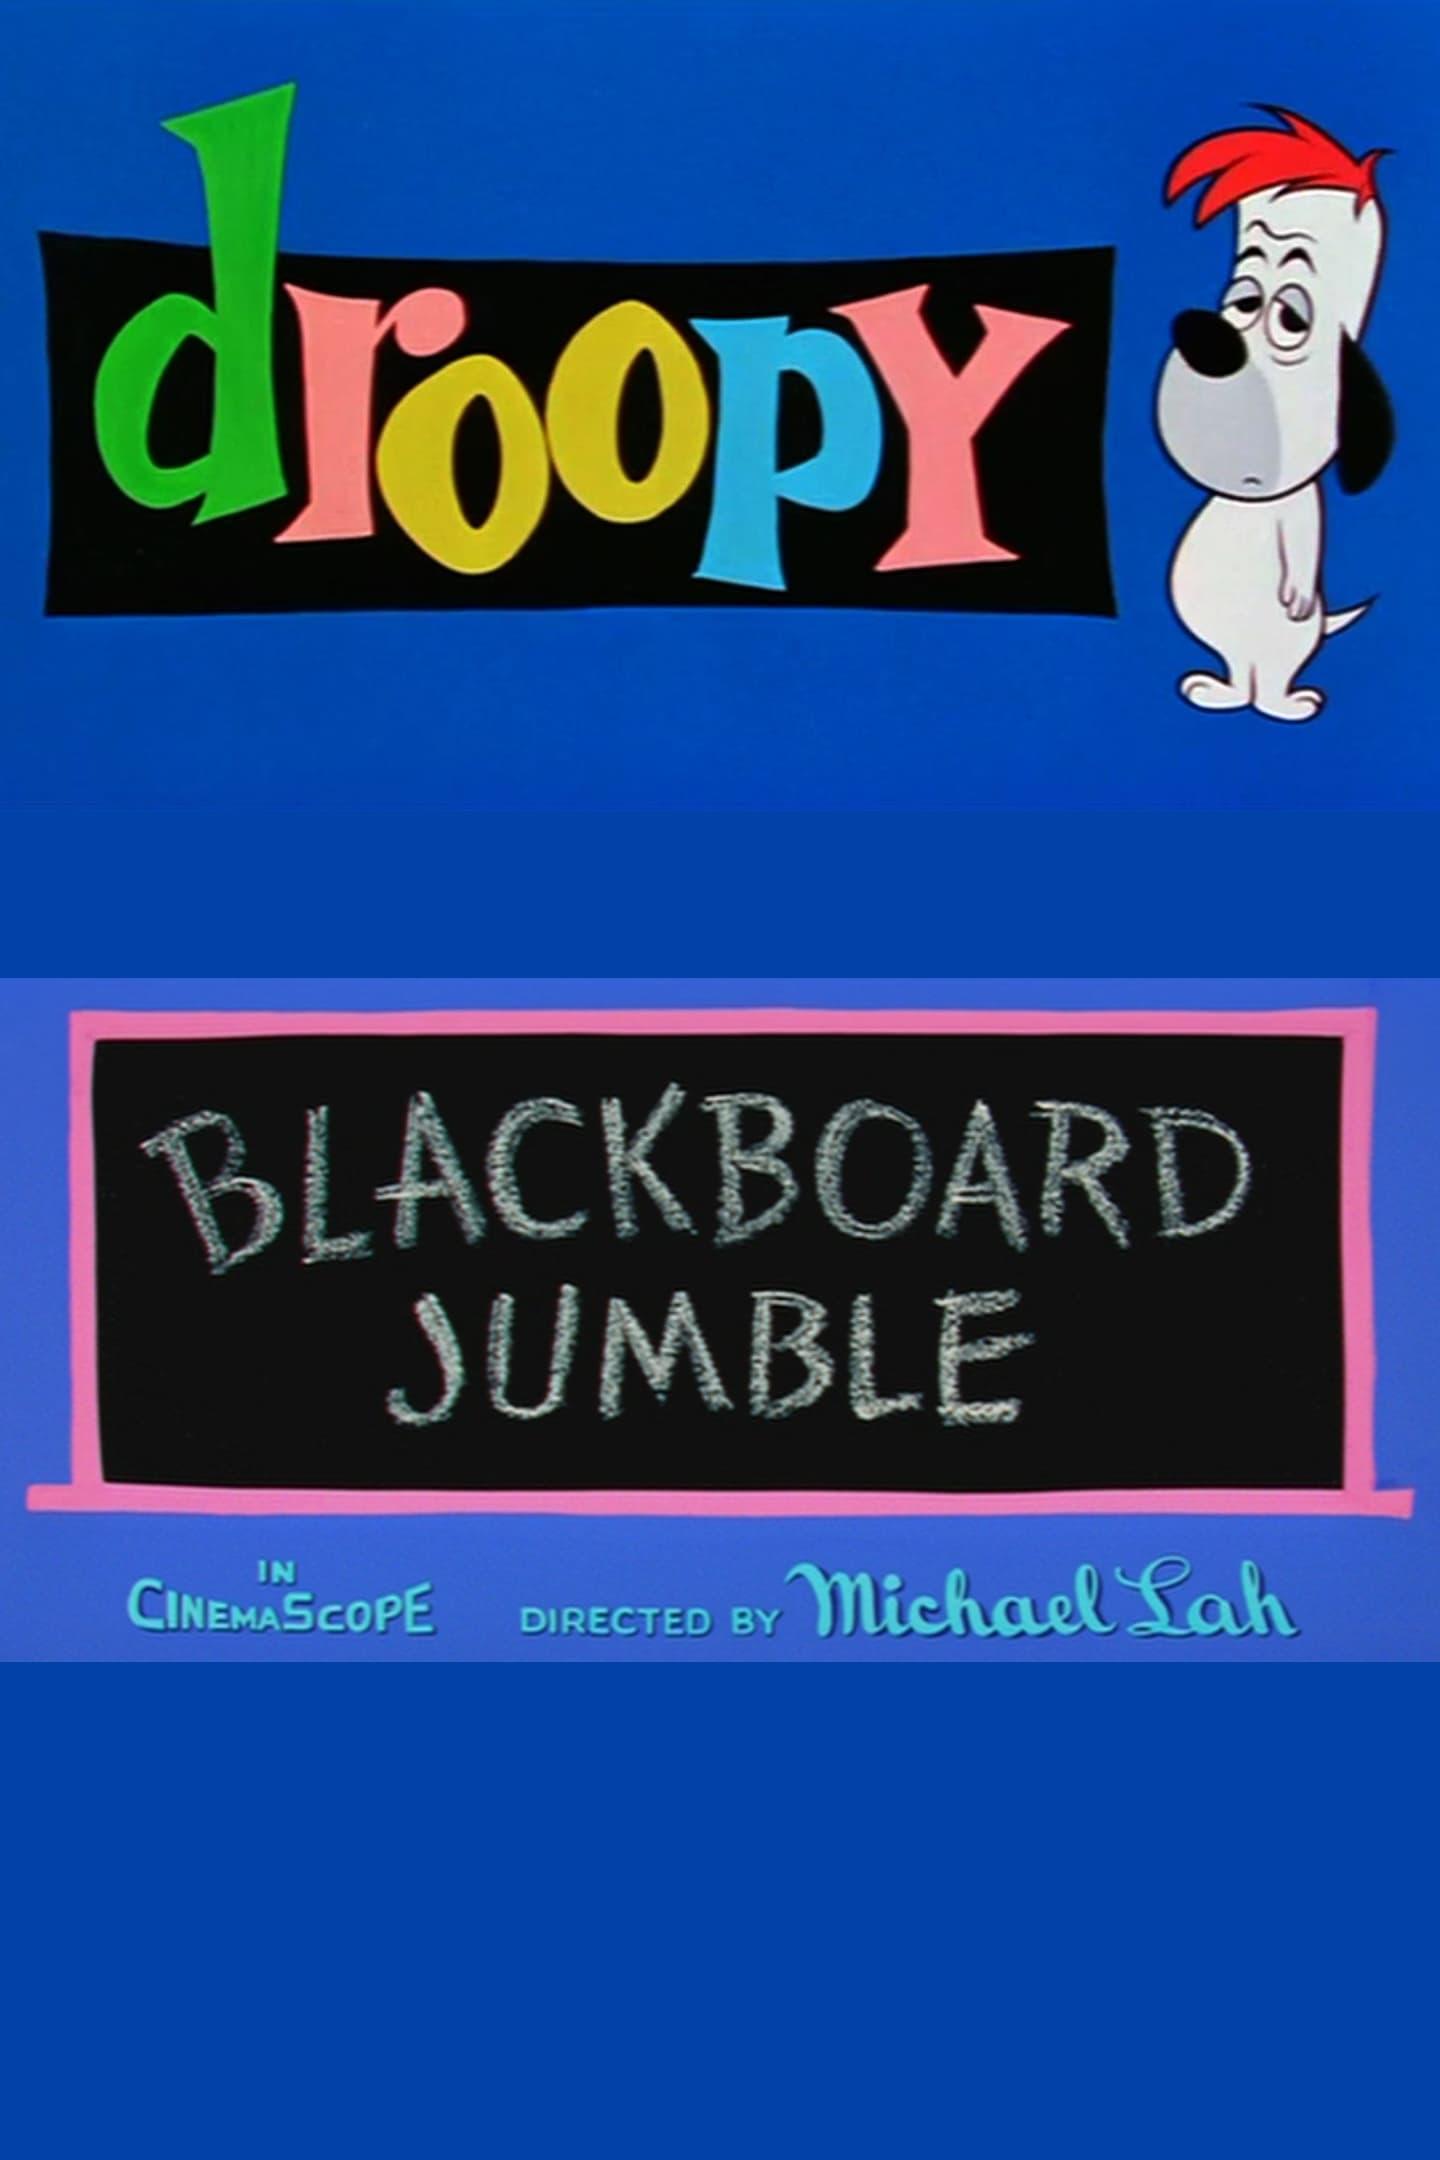 Blackboard Jumble poster